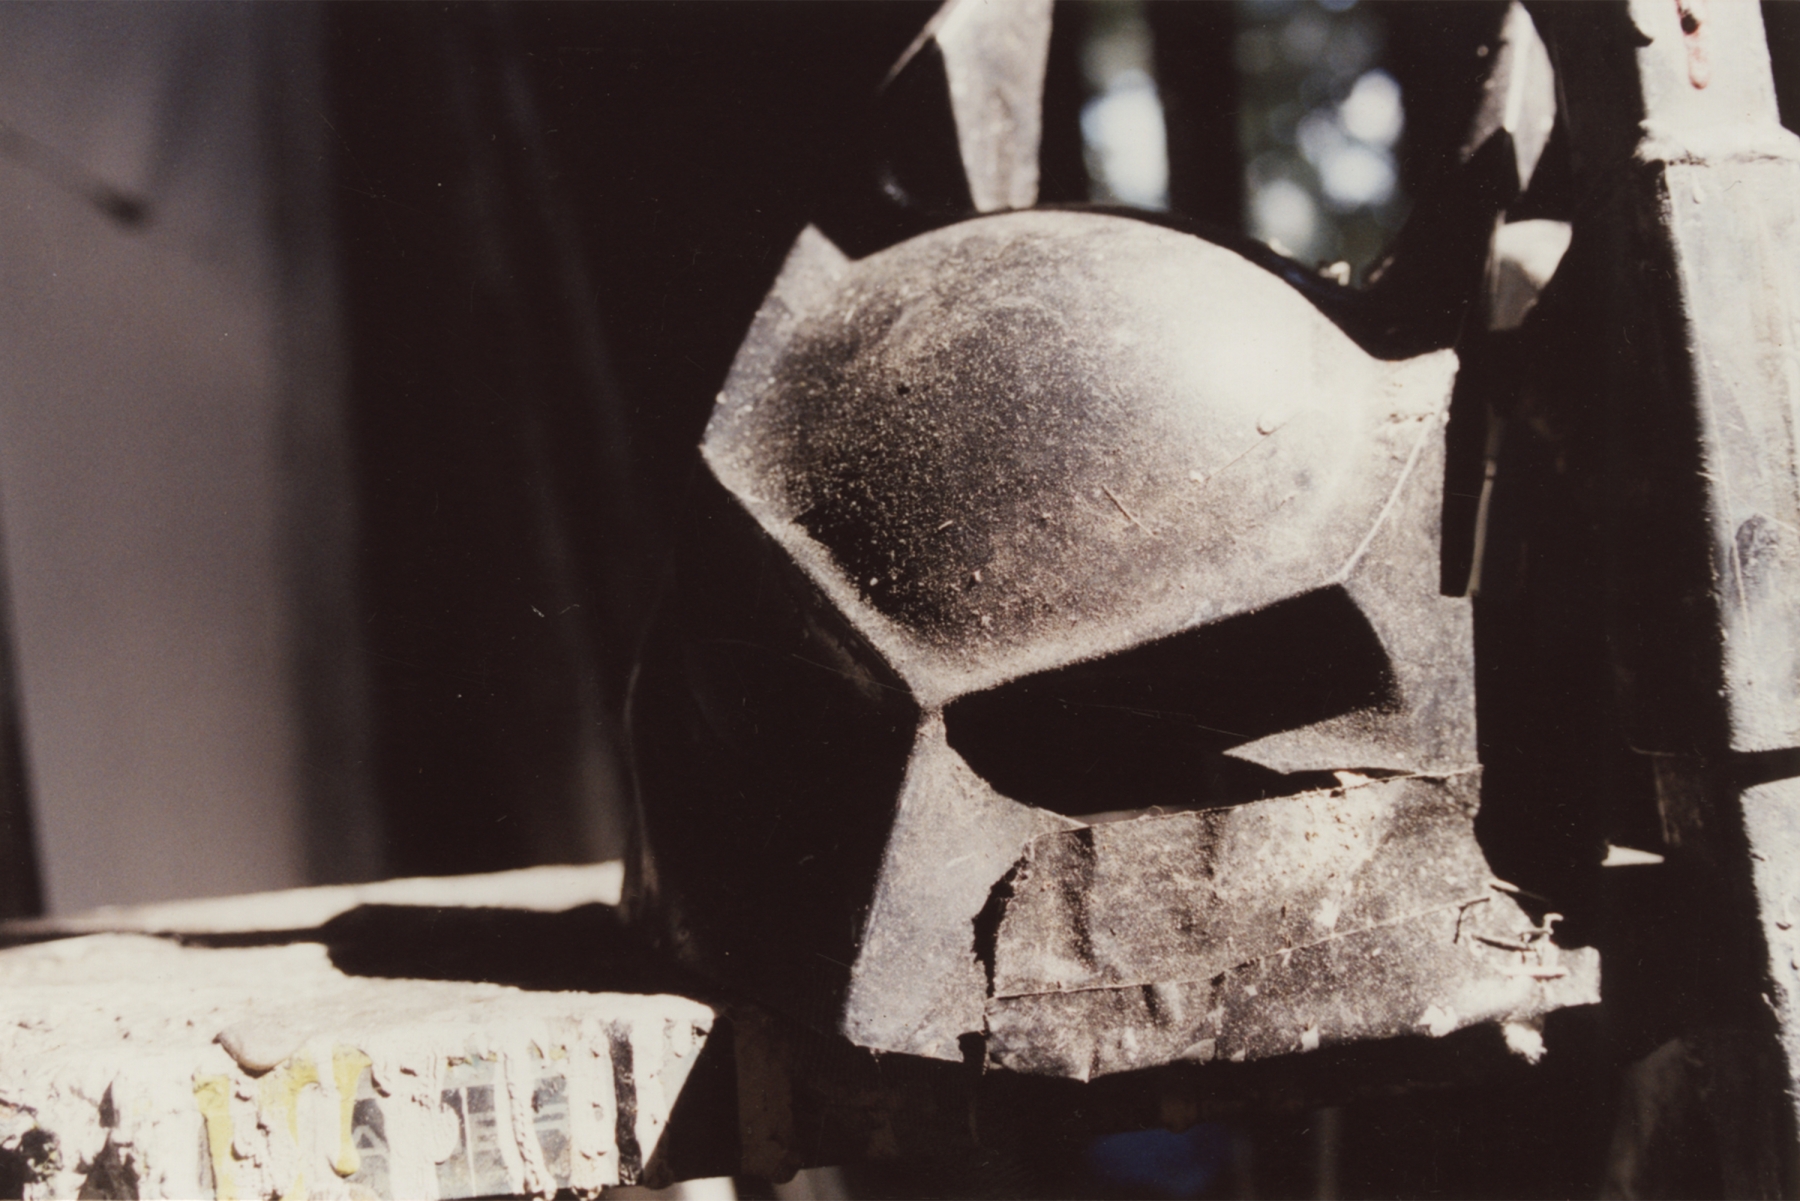 Photograph of Batman mask by Pensato, 1998.